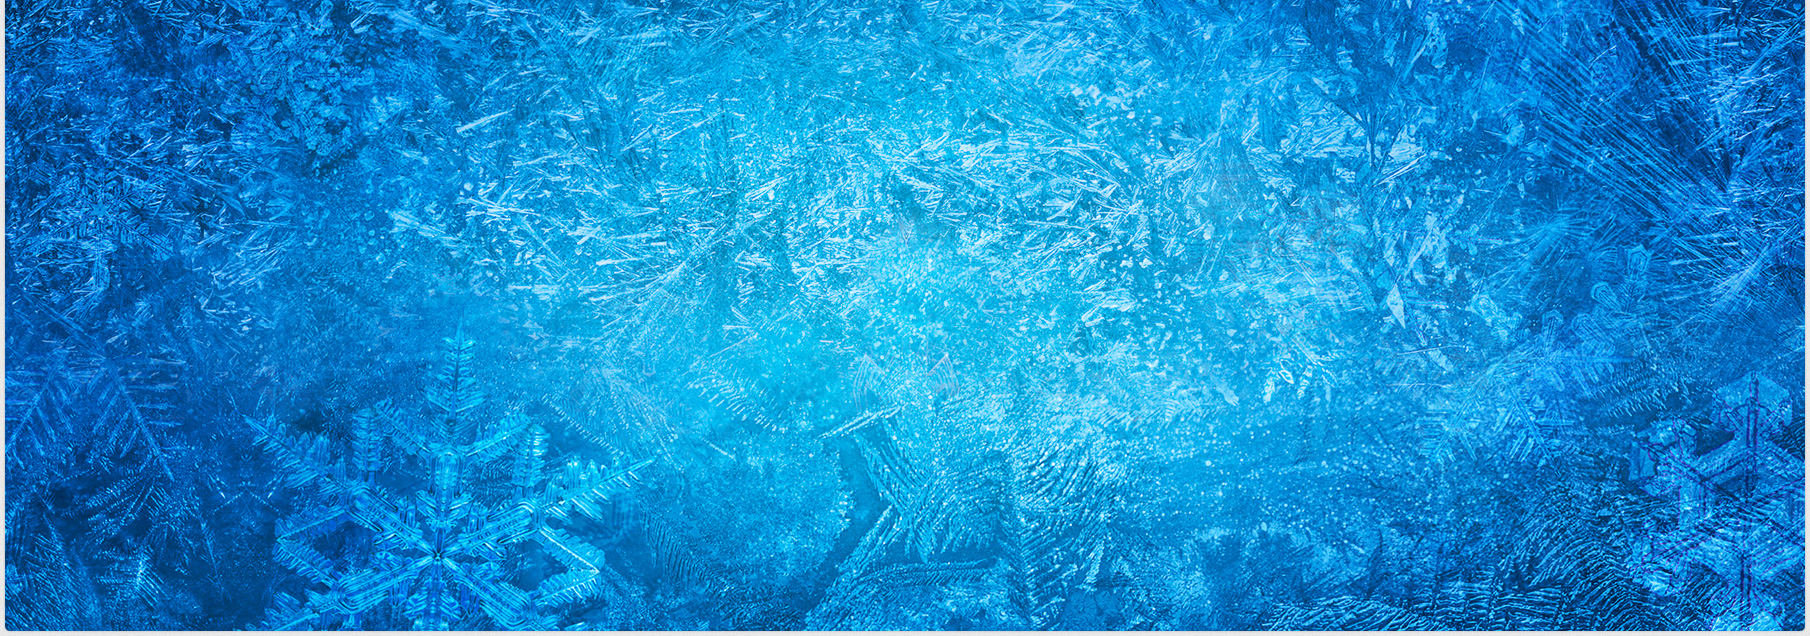  picture frozen background image frozen background wallpaper 1810x636